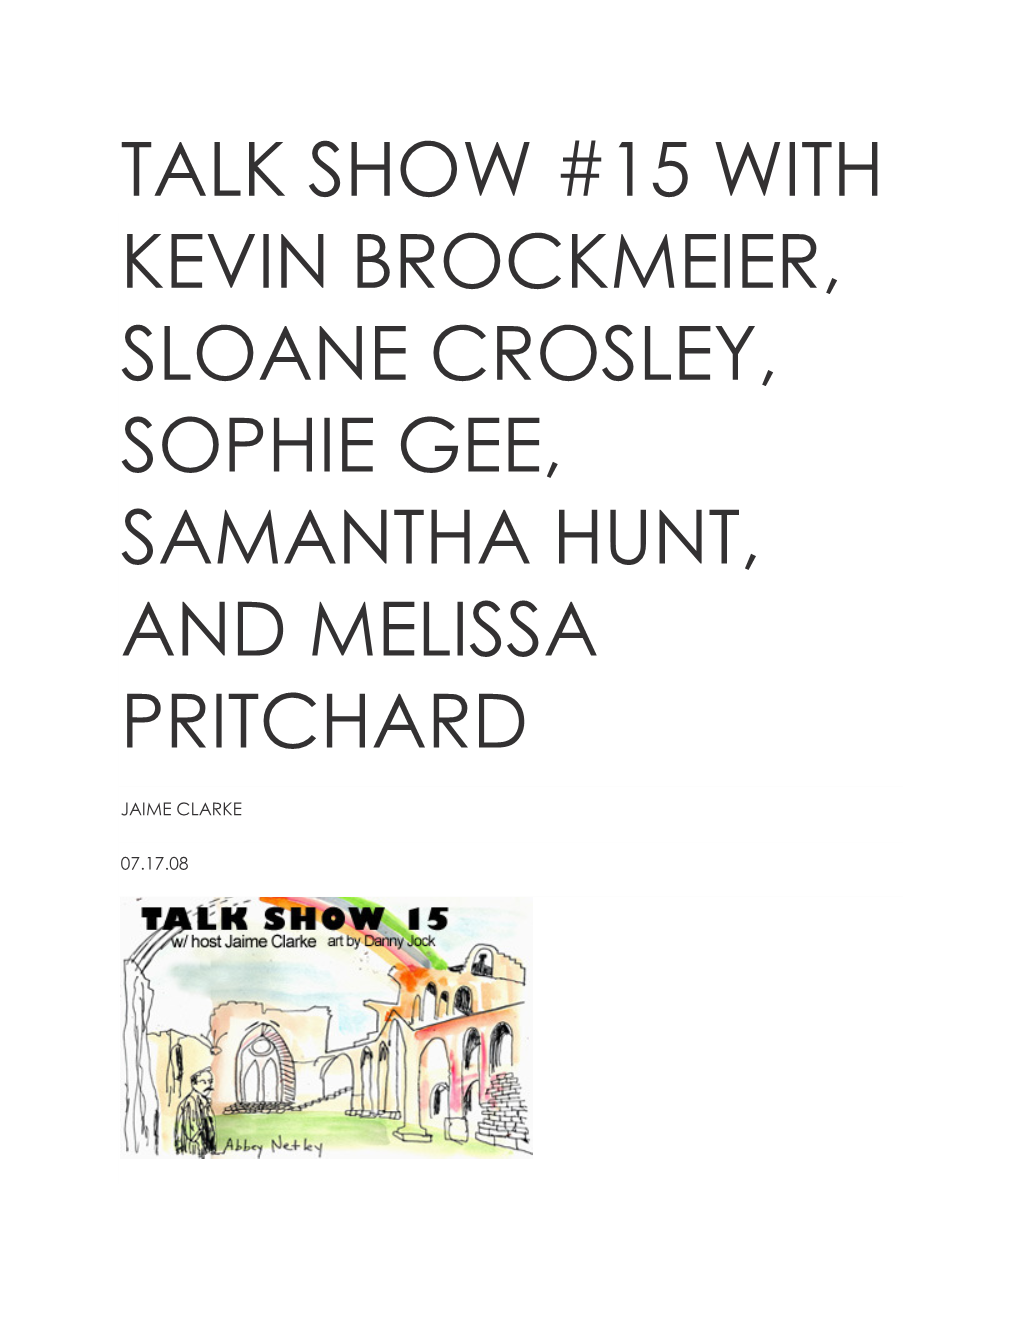 Talk Show #15 with Kevin Brockmeier, Sloane Crosley, Sophie Gee, Samantha Hunt, and Melissa Pritchard